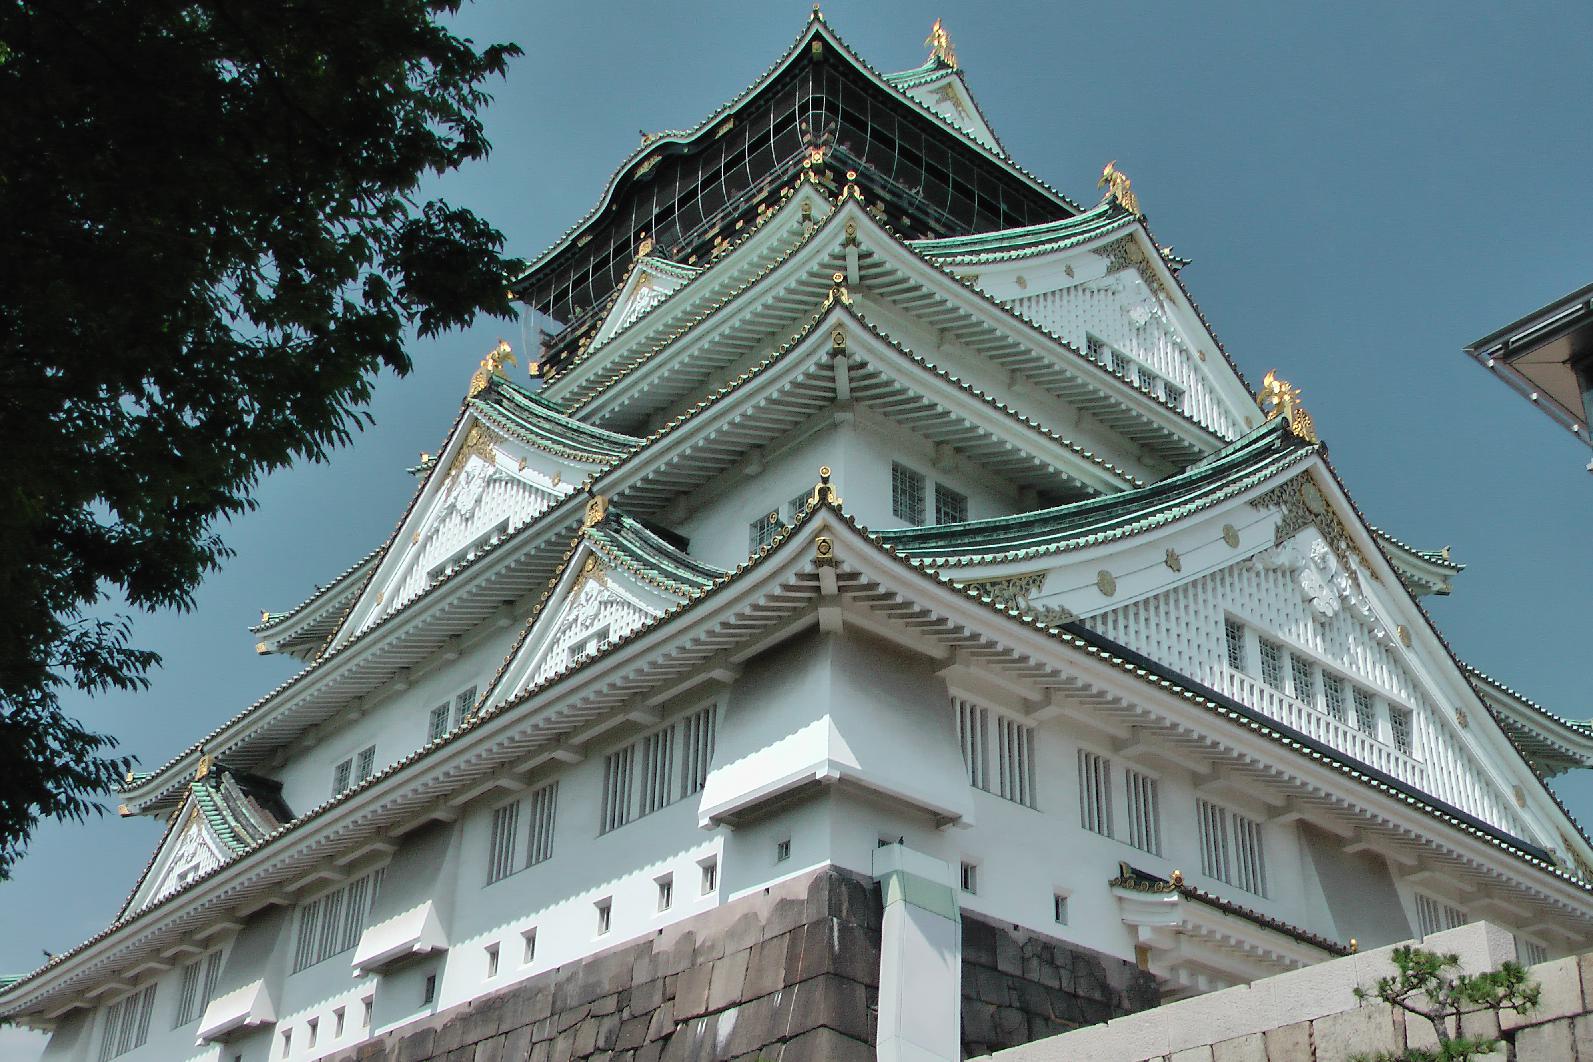 Osaka's castle